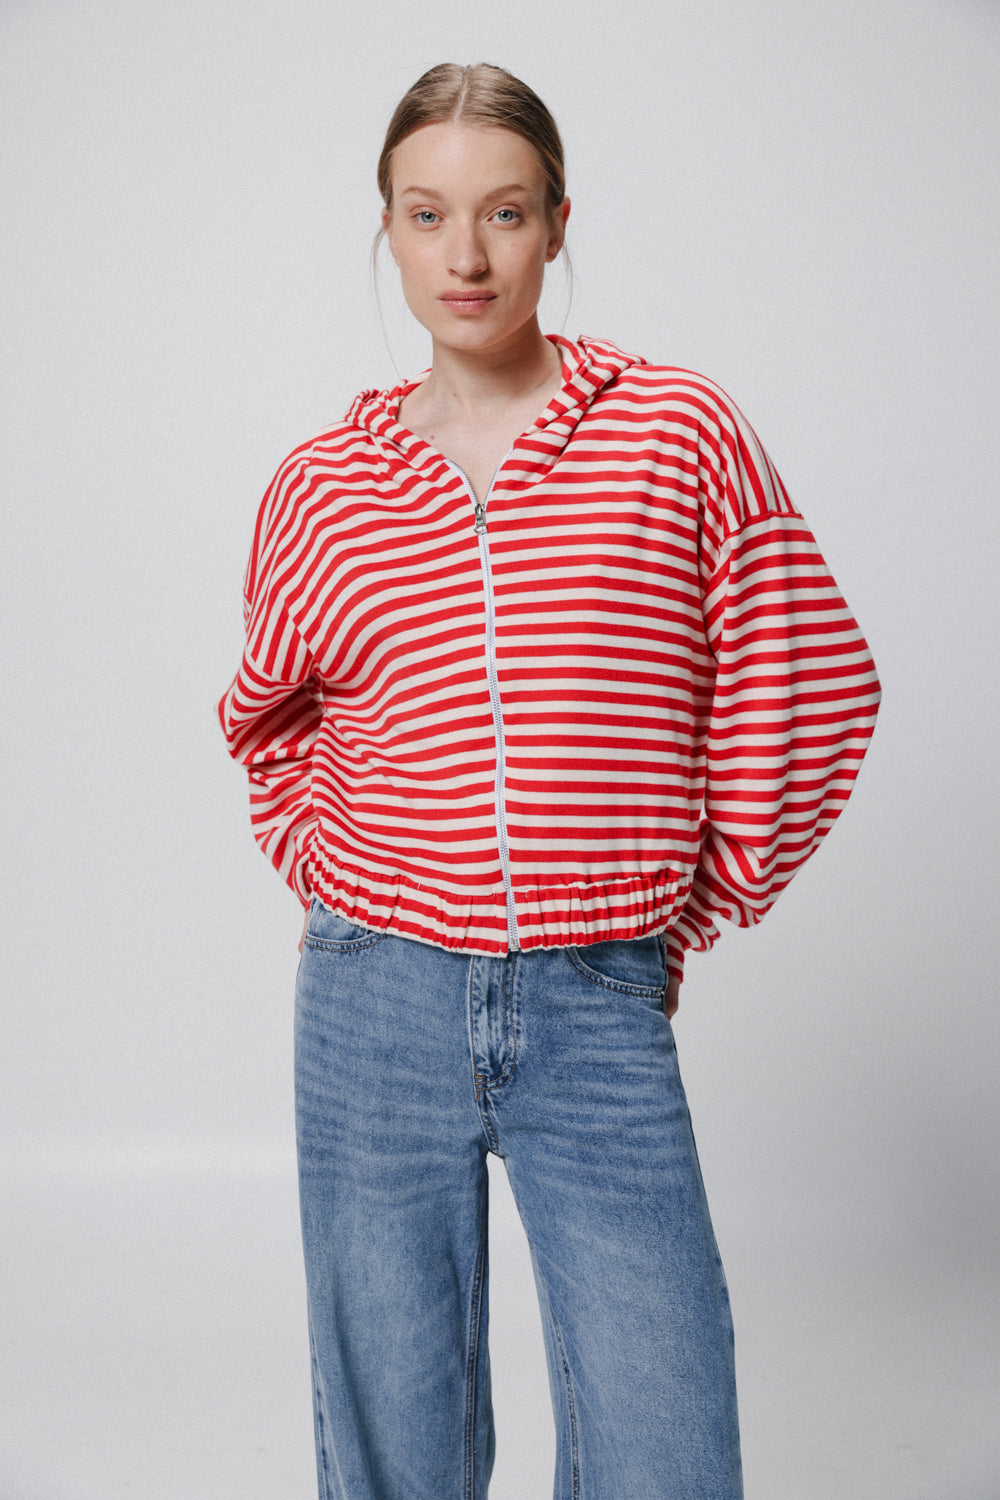 Soda Red Stripes Sweatshirt